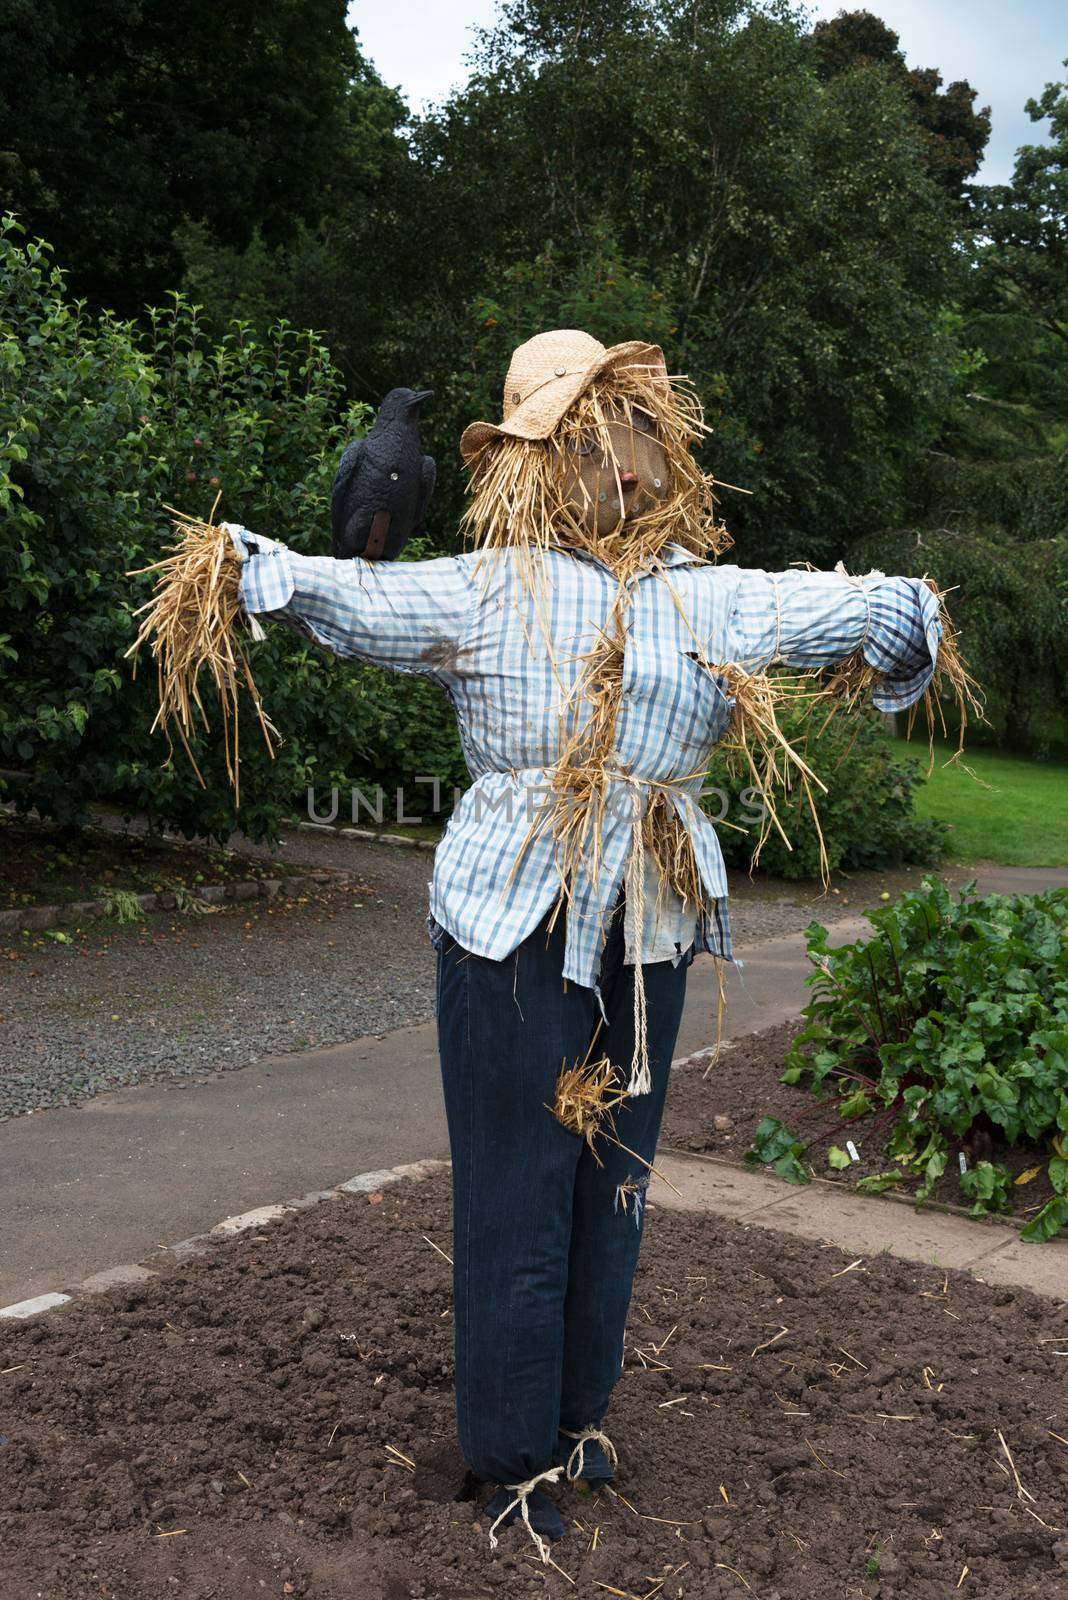 Straw Scarecrow in Vegetable Garden